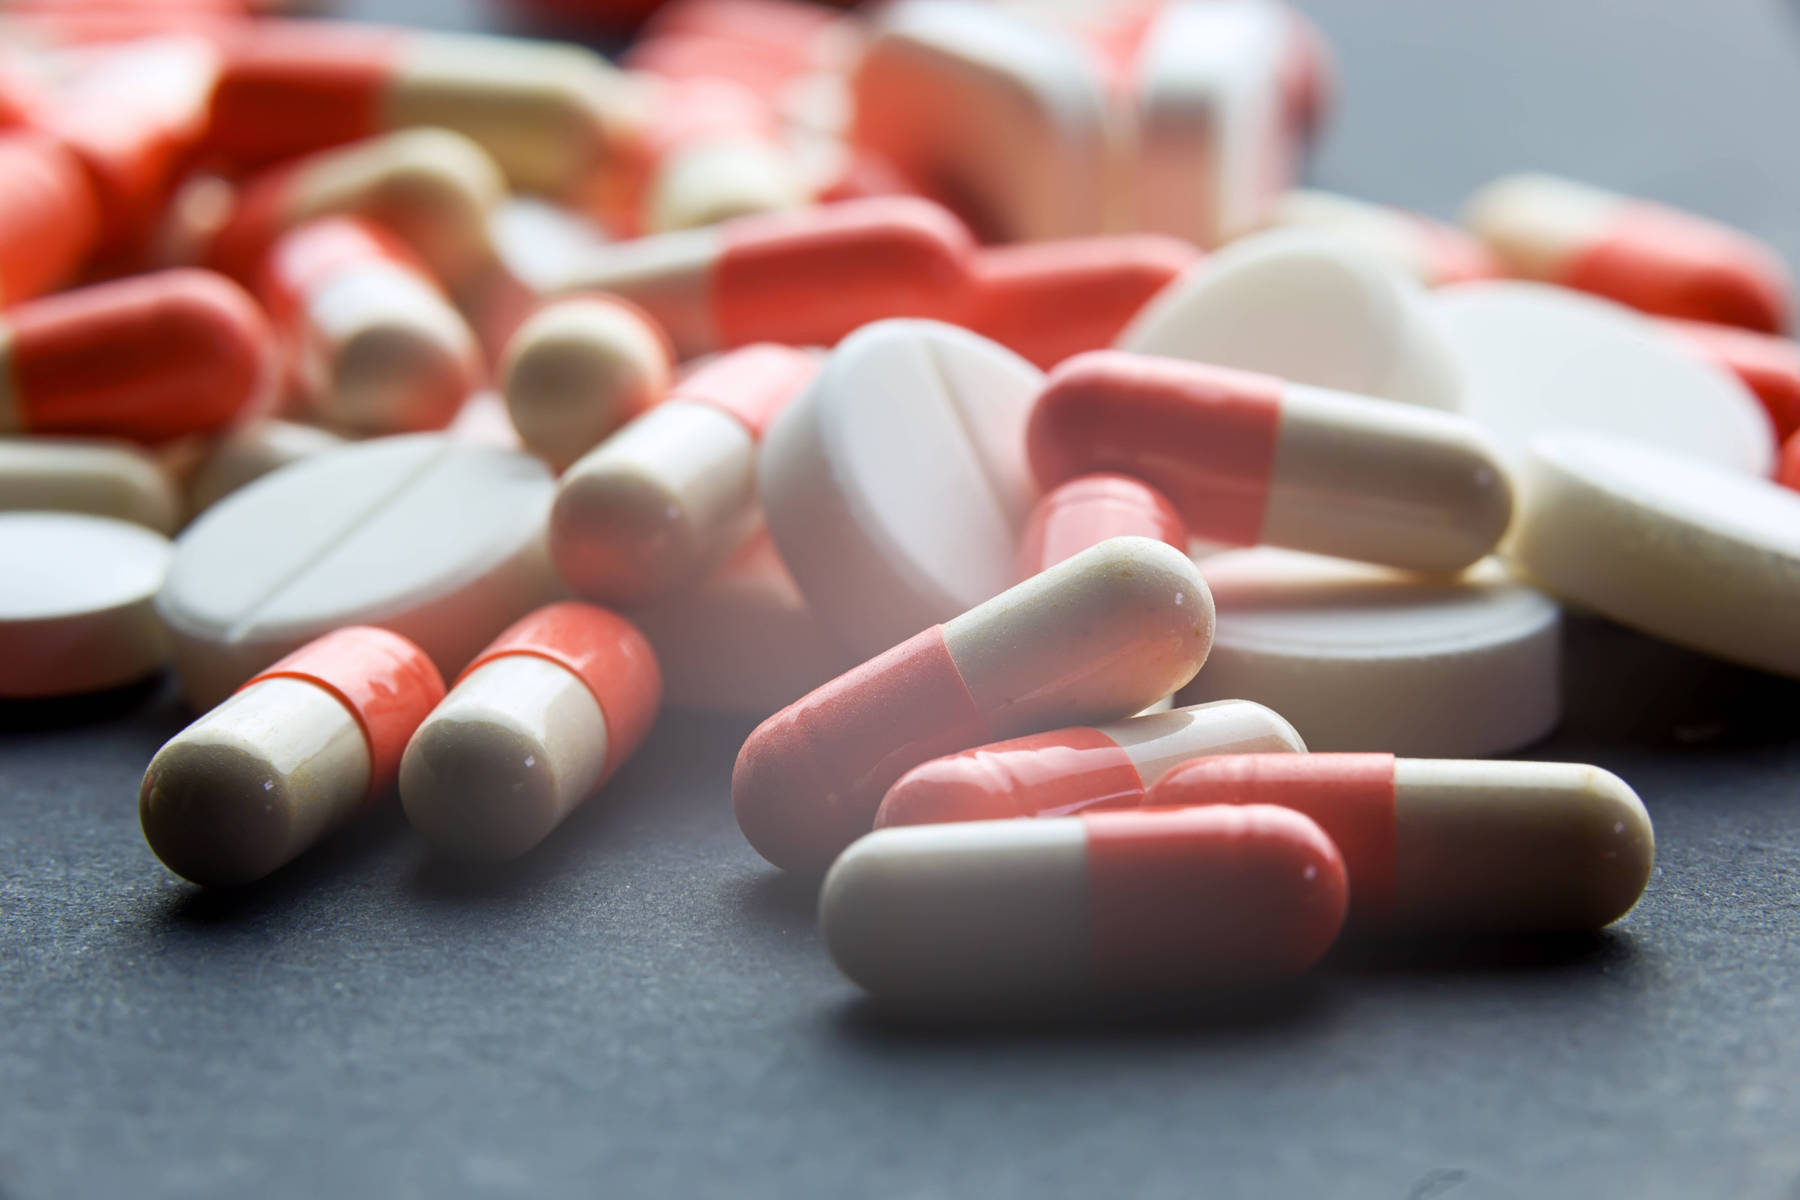 В Минздраве призвали не принимать антибиотики без назначения врача